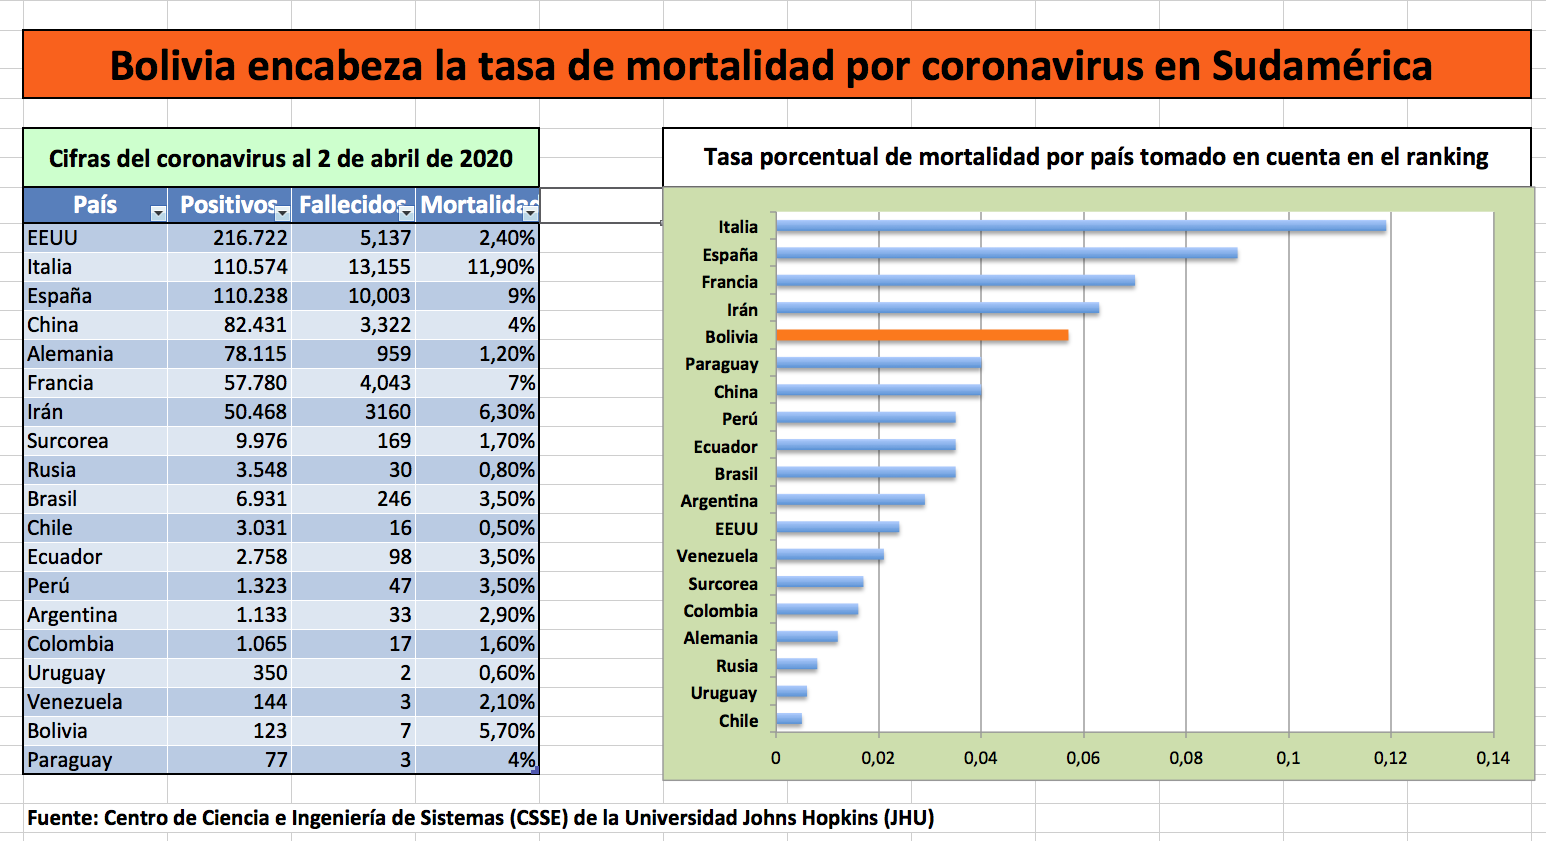 Bolivia encabeza la tasa de mortalidad  por coronavirus en Sudamérica